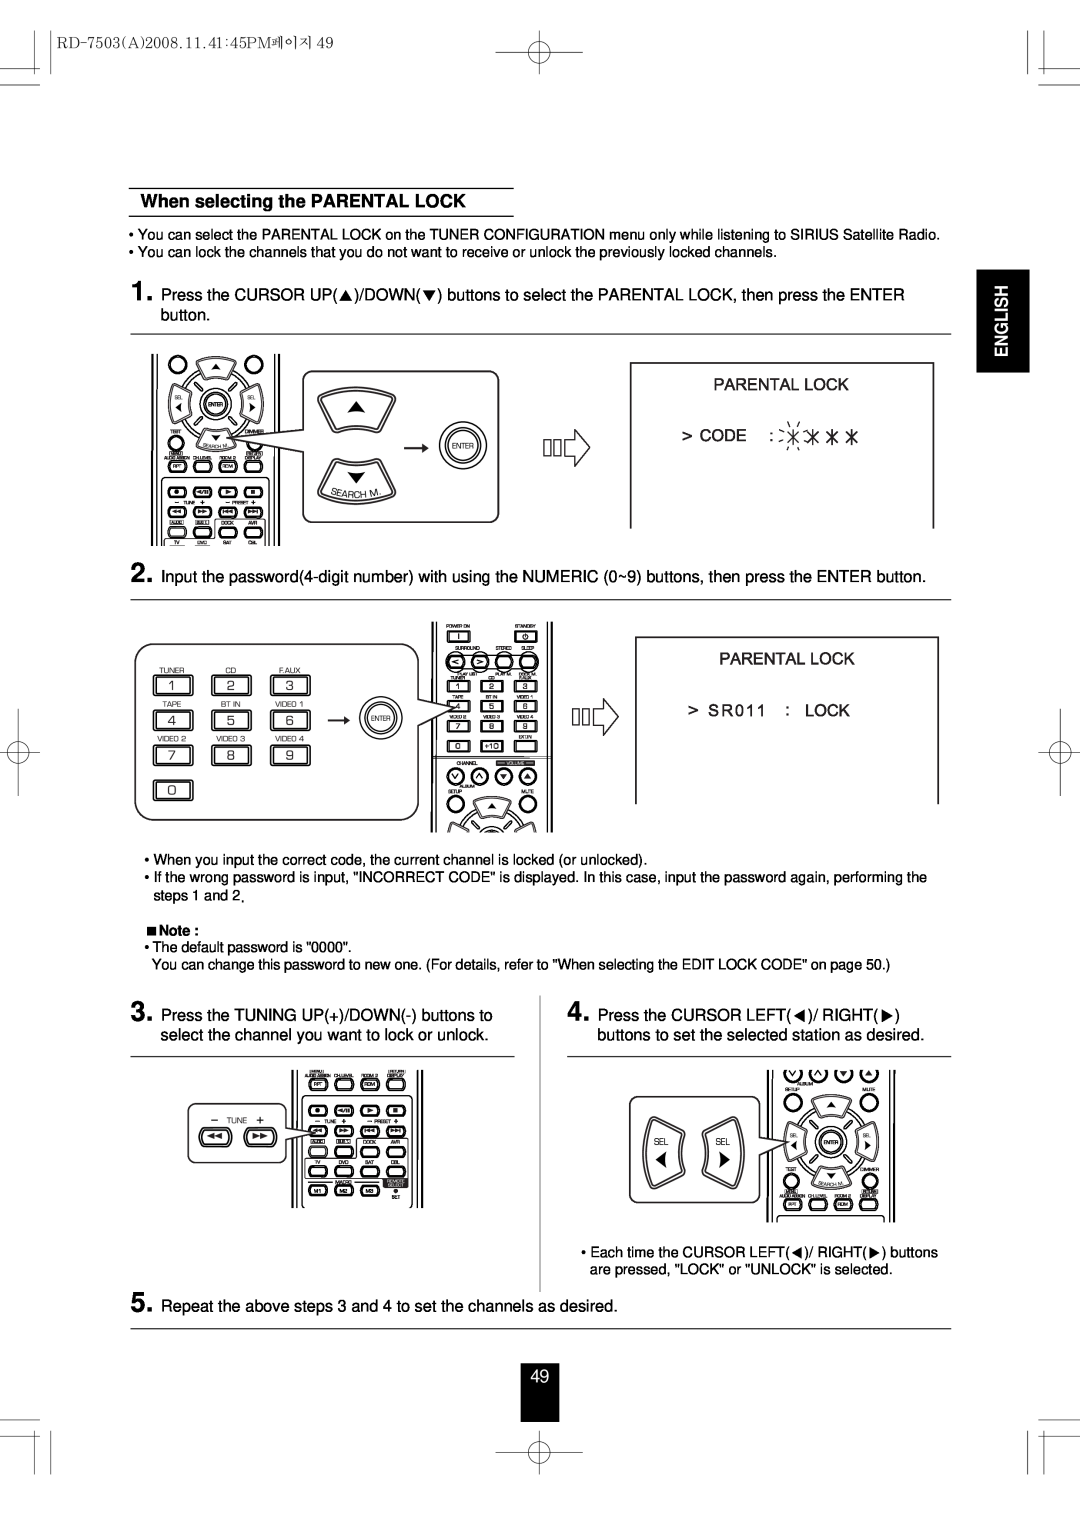 Sherwood RD-7503 manual When selecting the PARENTAL LOCK, English 